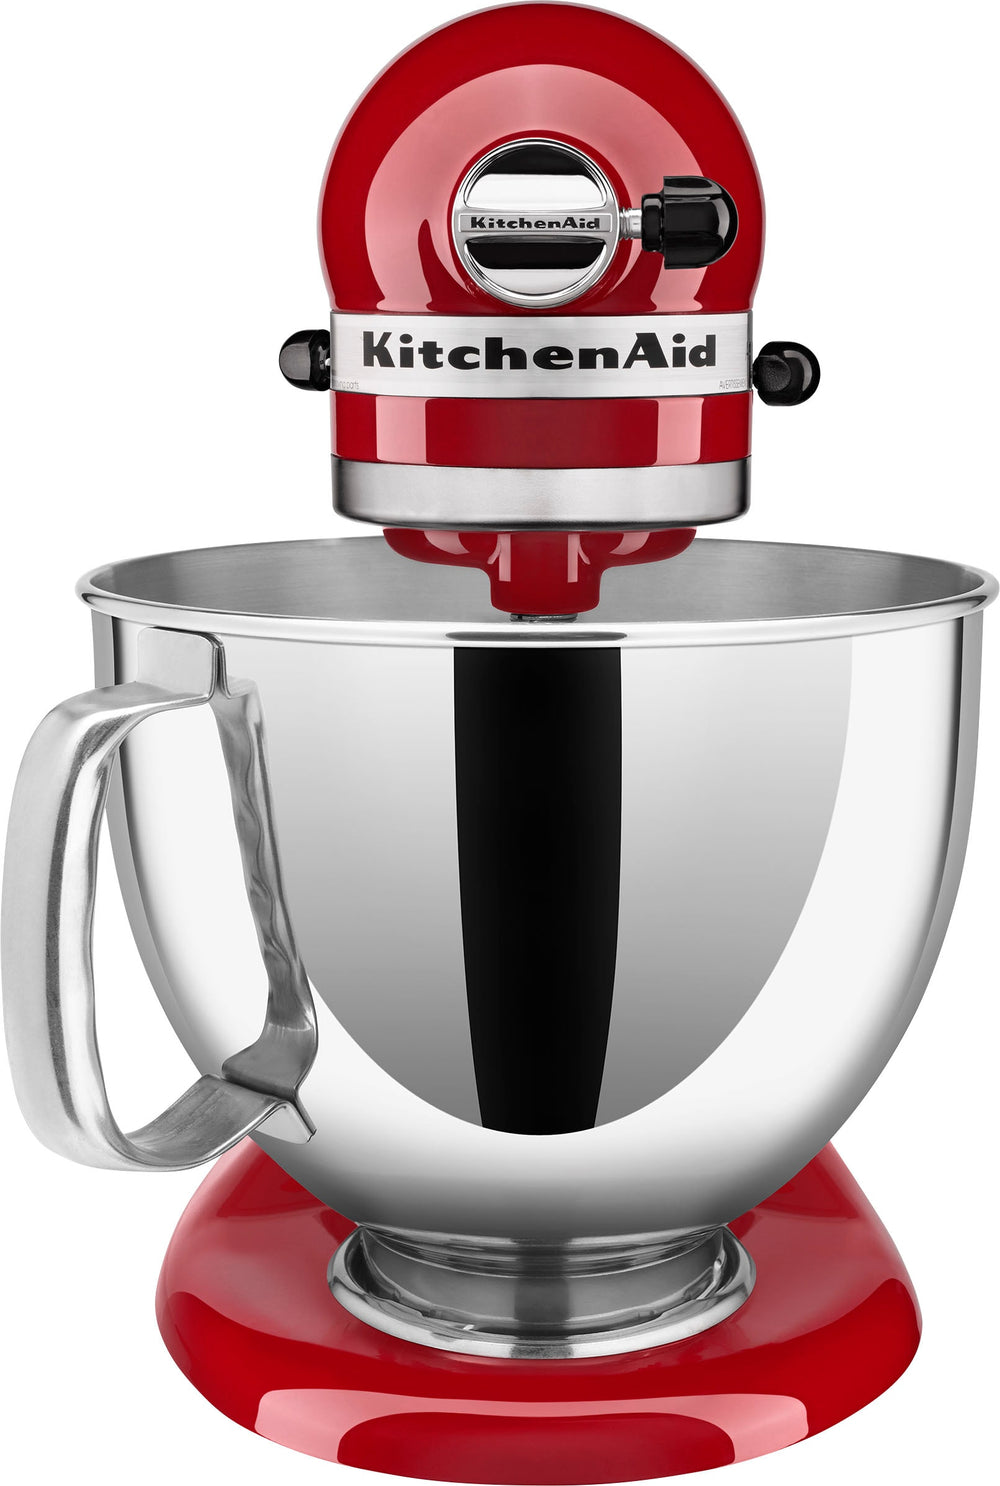 KitchenAid - KSM150PSER Artisan Series Tilt-Head Stand Mixer - Empire Red_1